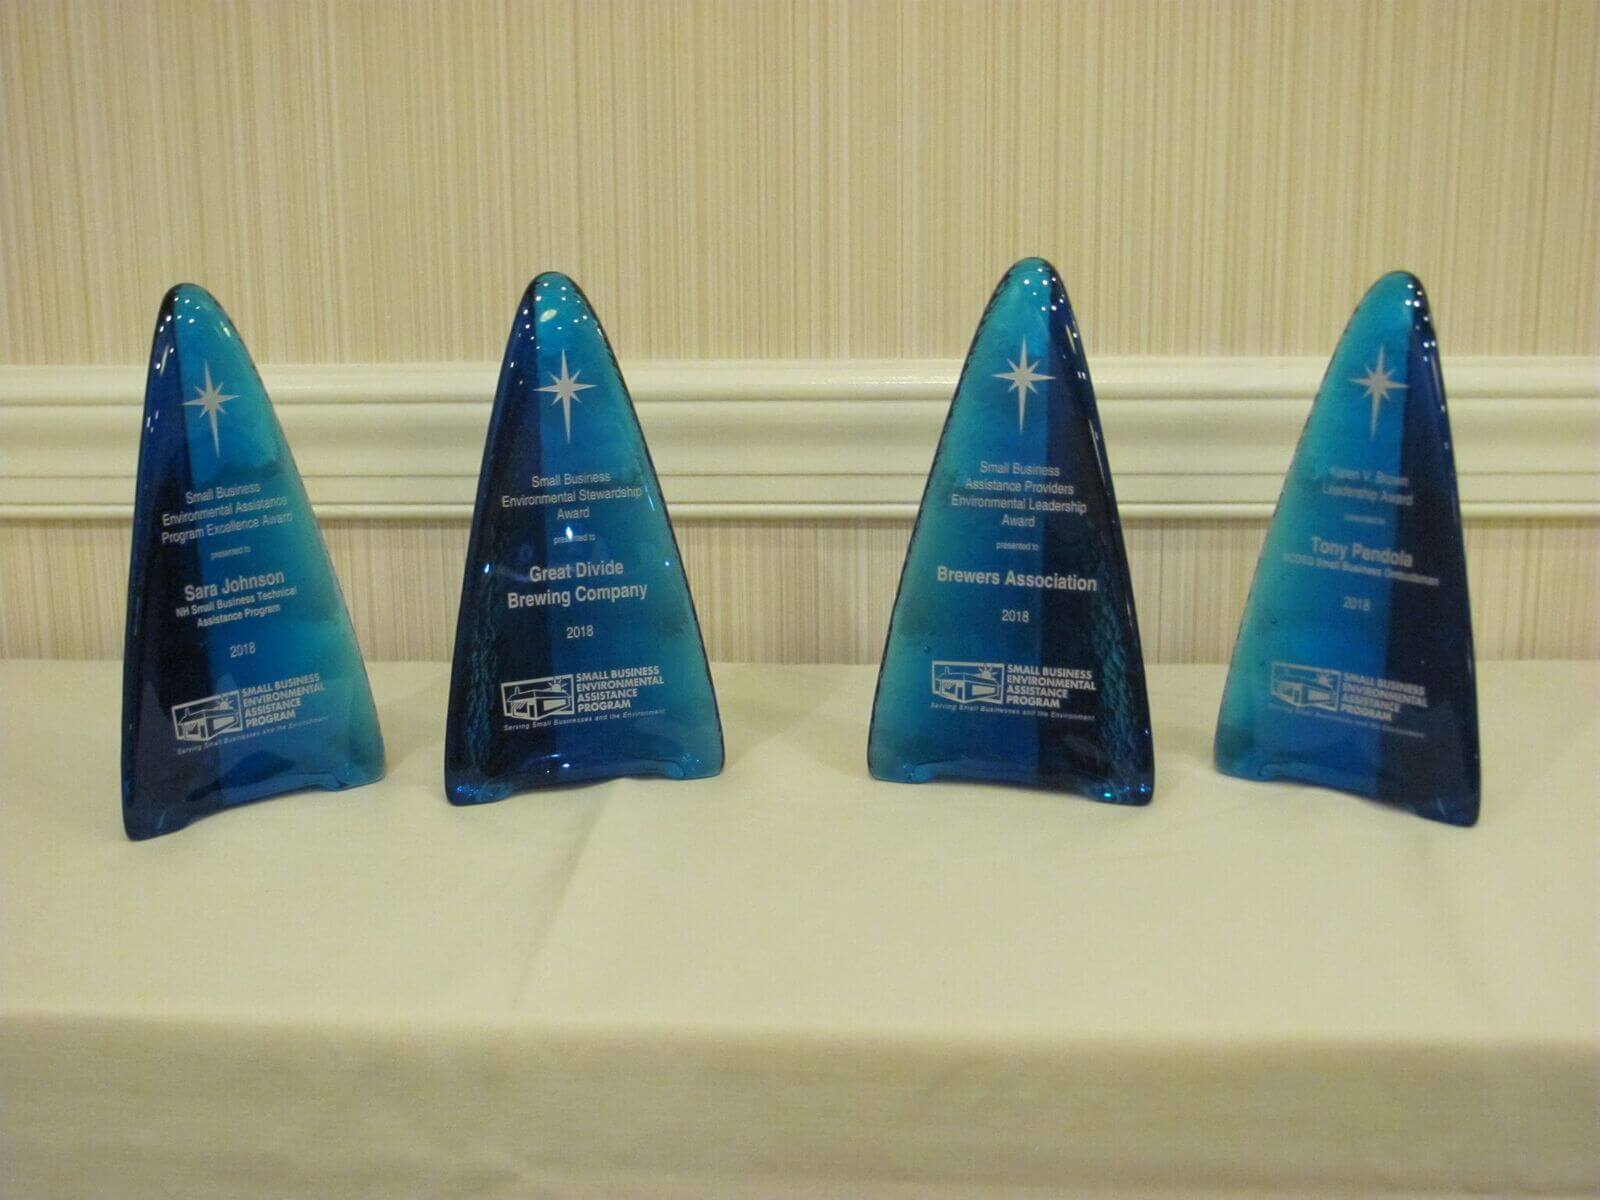 Image of several SBEAP awards.